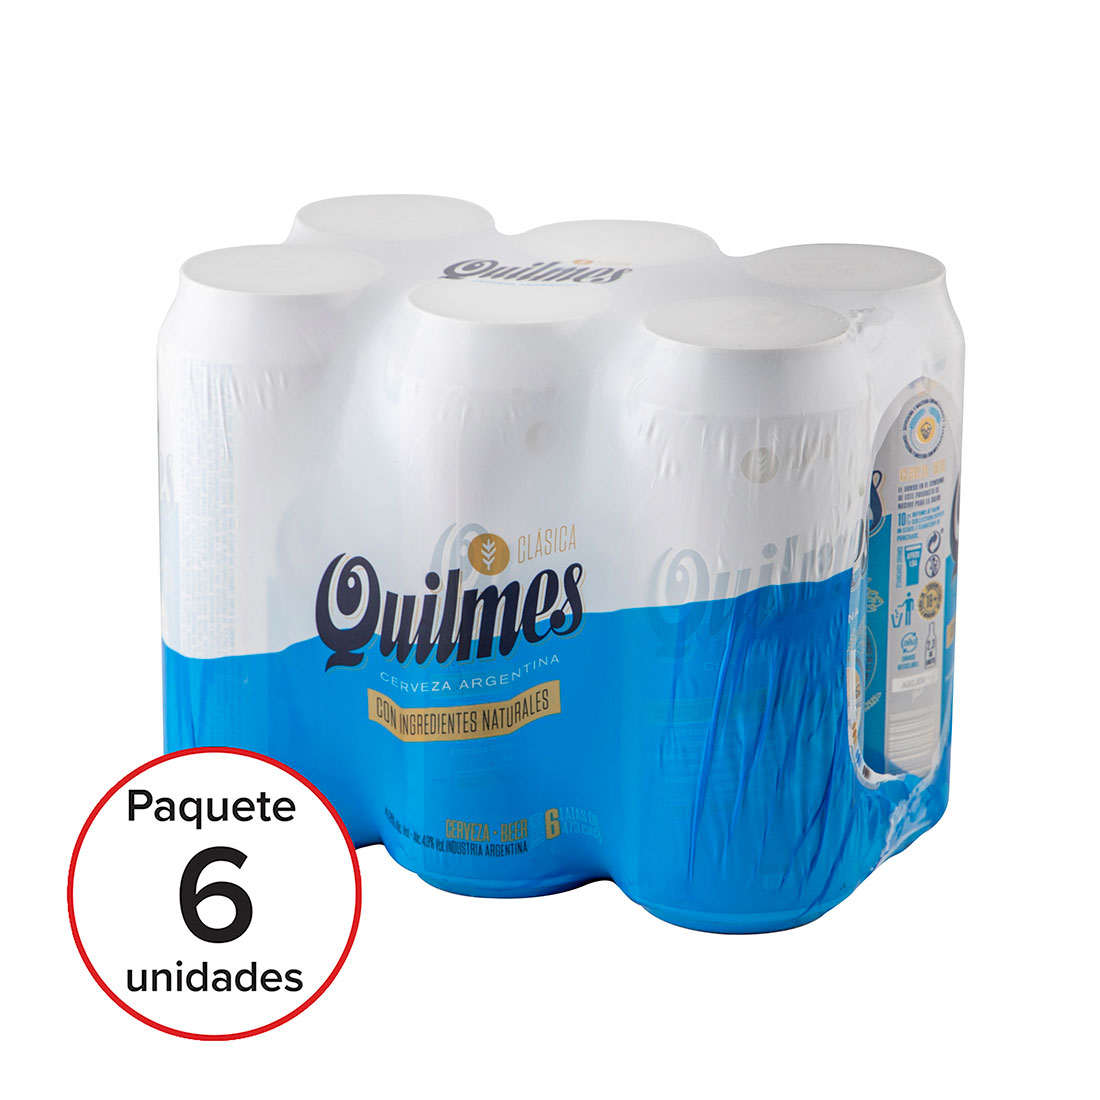 Cerveza Quilmes 473ml 6unds